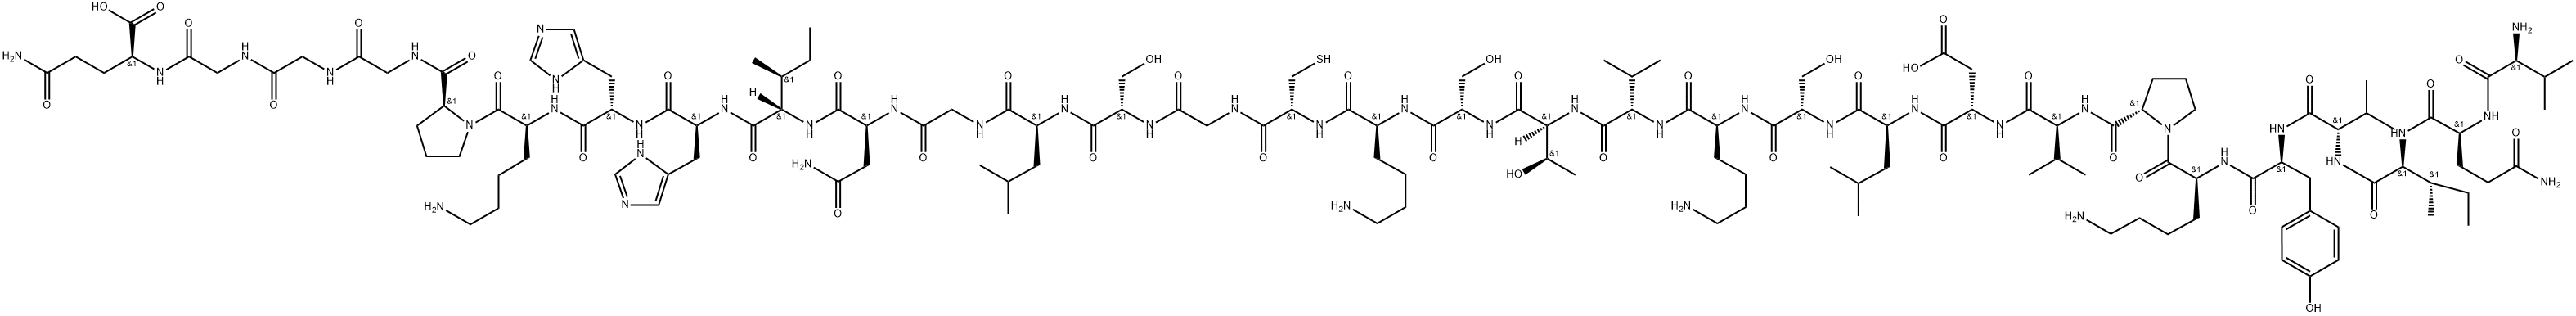 Tau Peptide (306-336) (Repeat 3 Domain) Structure